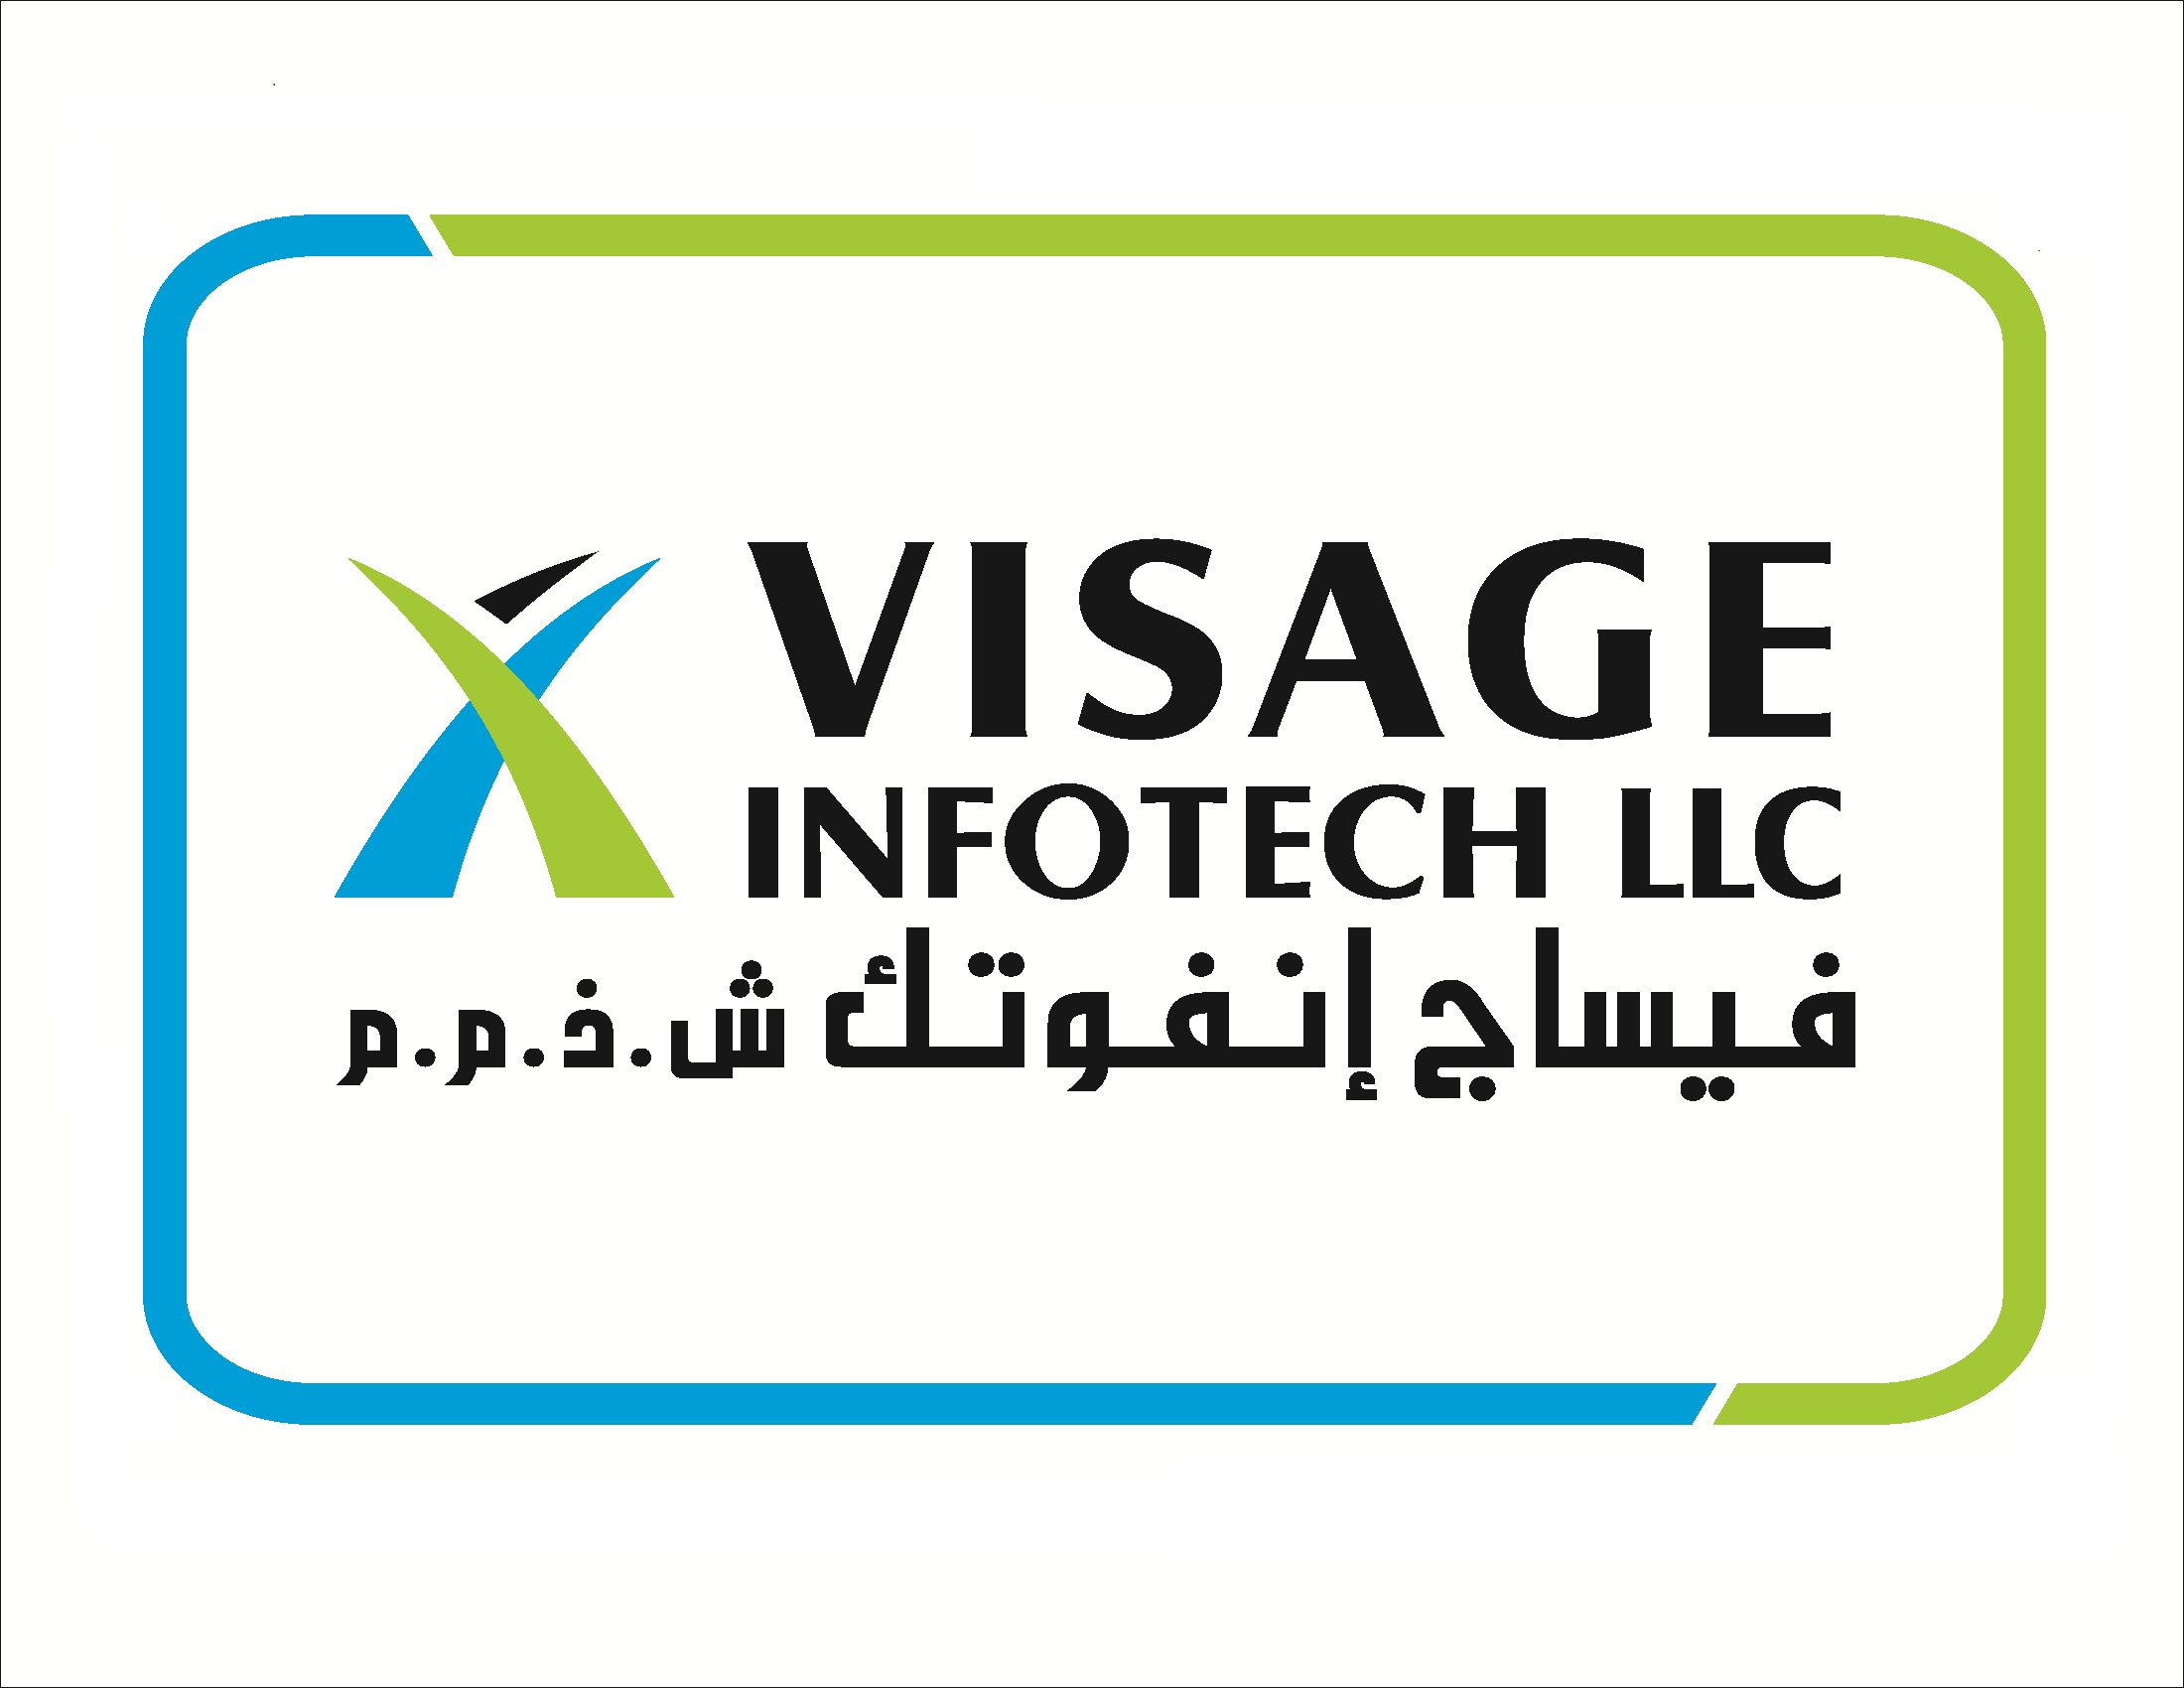 Visage InfoTech Logo